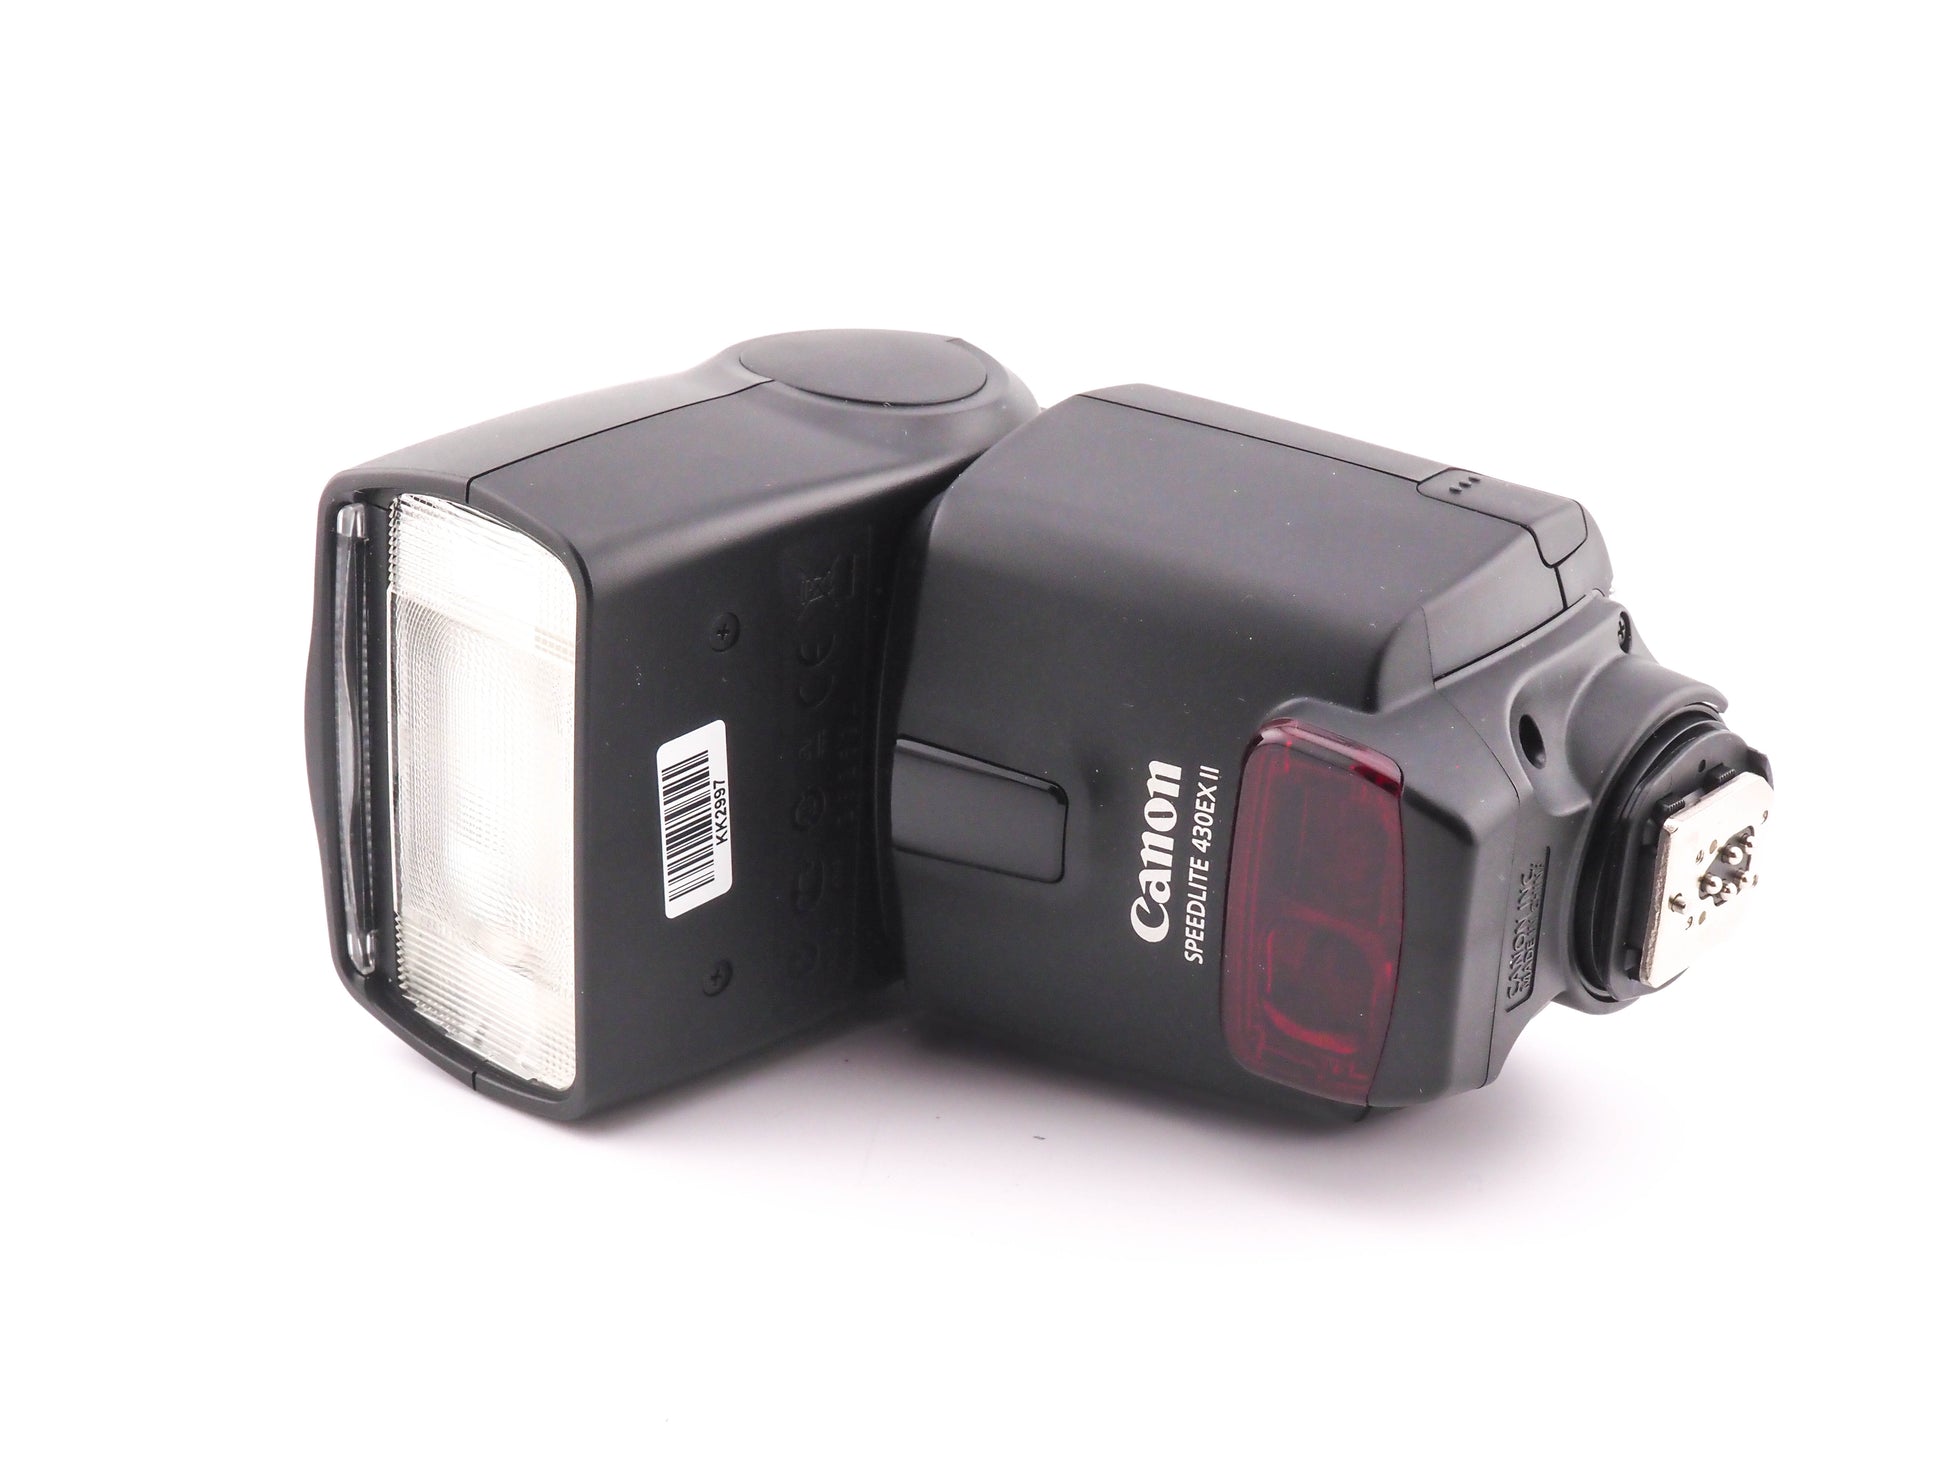 Canon Speedlite 430EX II Flash